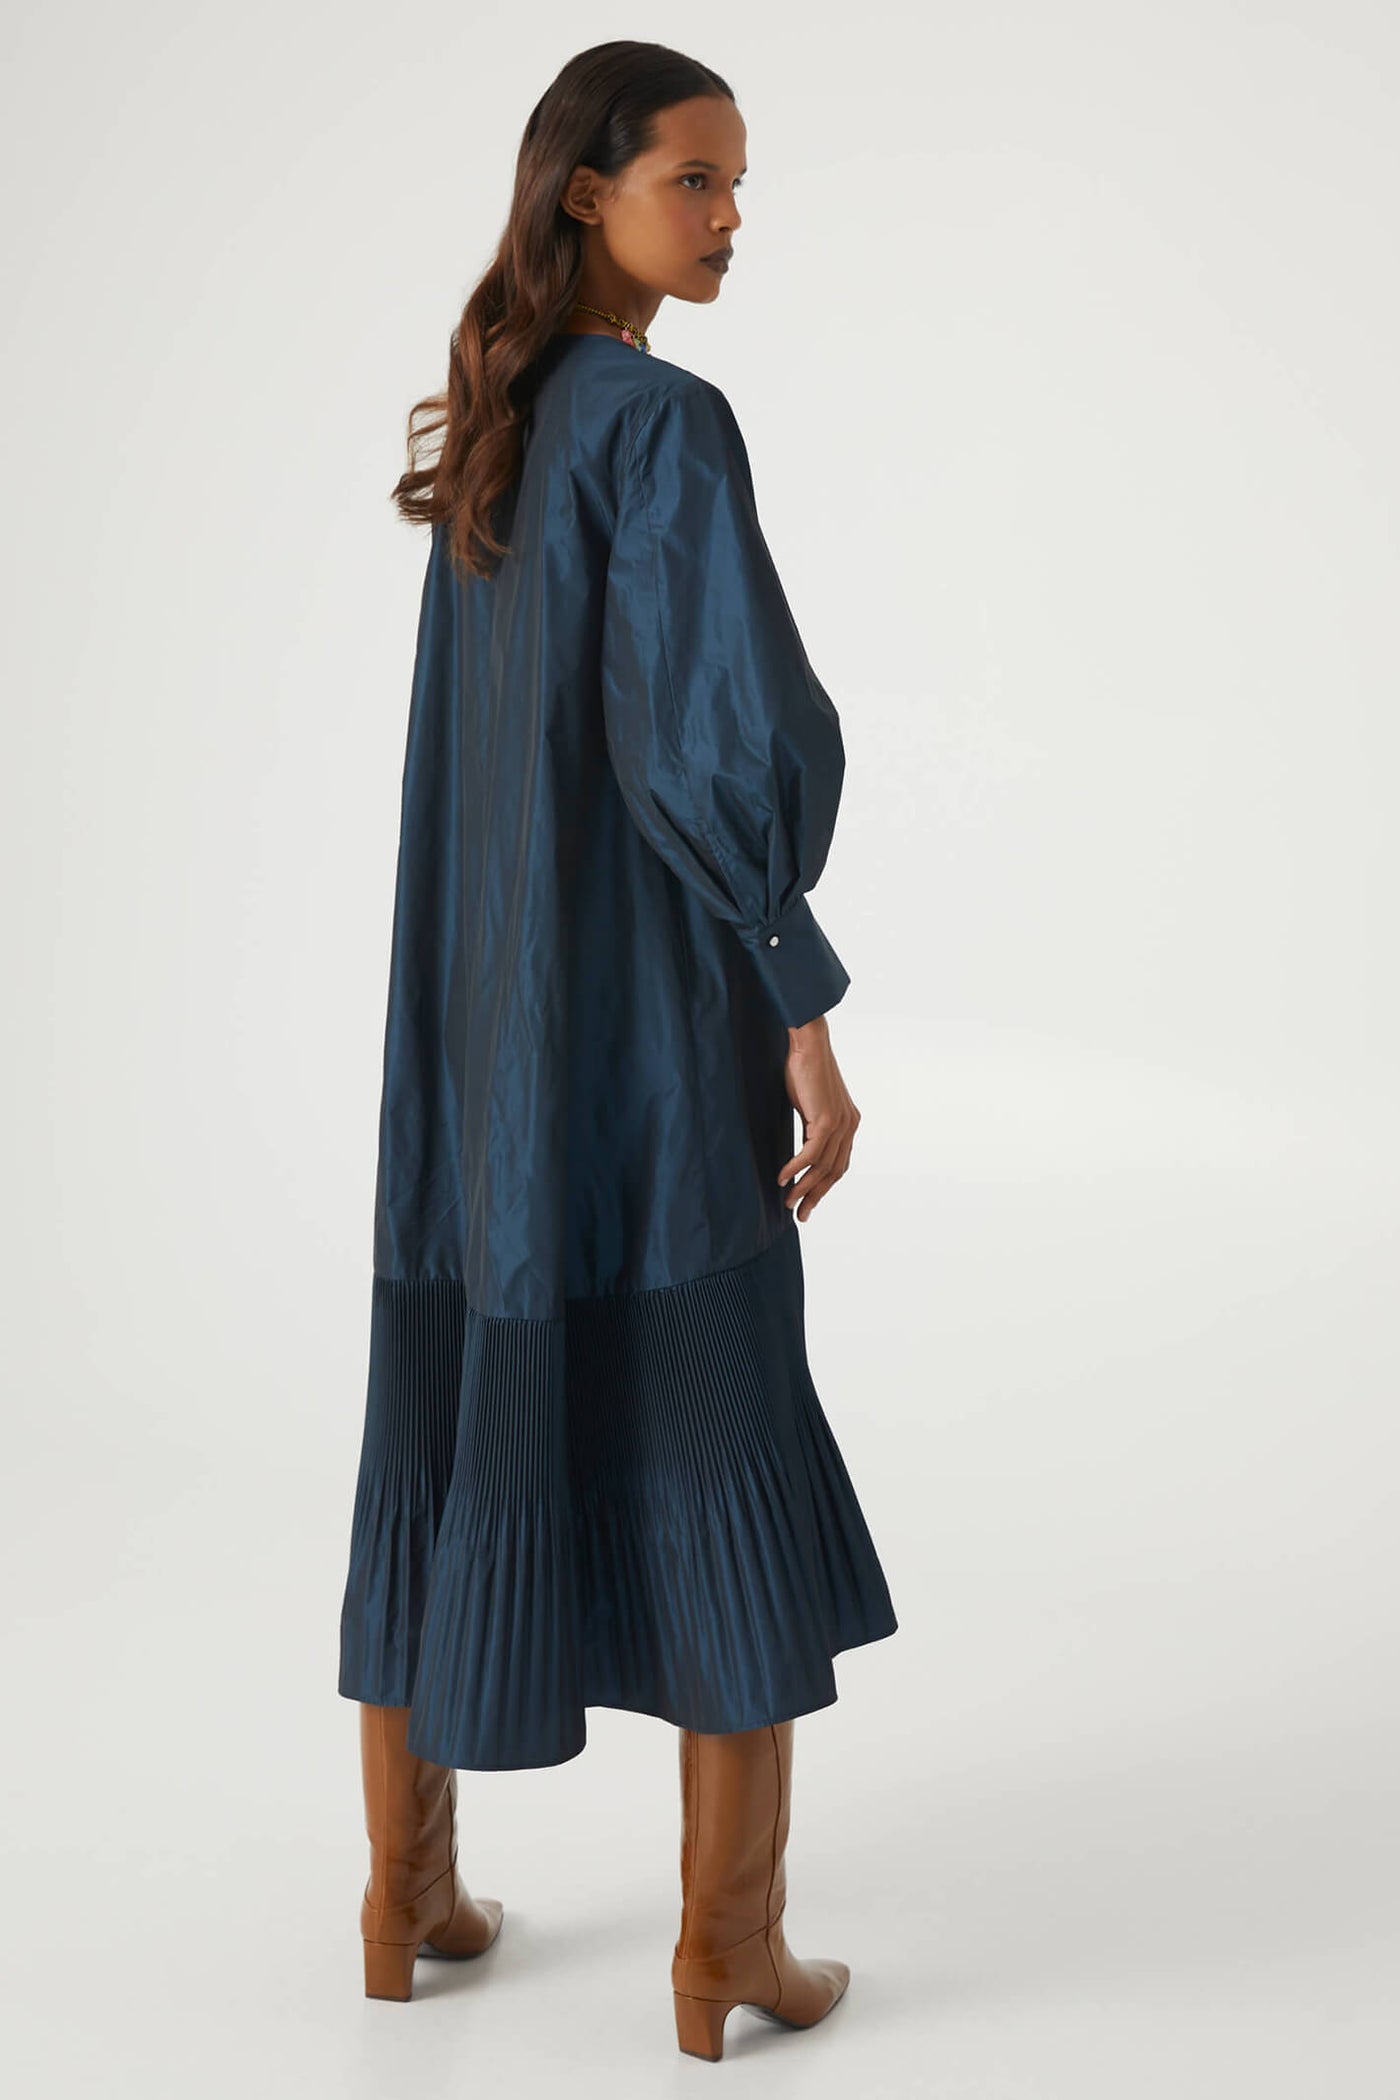 Beatrice B 6837 Ionio Blue Taffeta Dress With Micro Pleats - Lonah Boutique